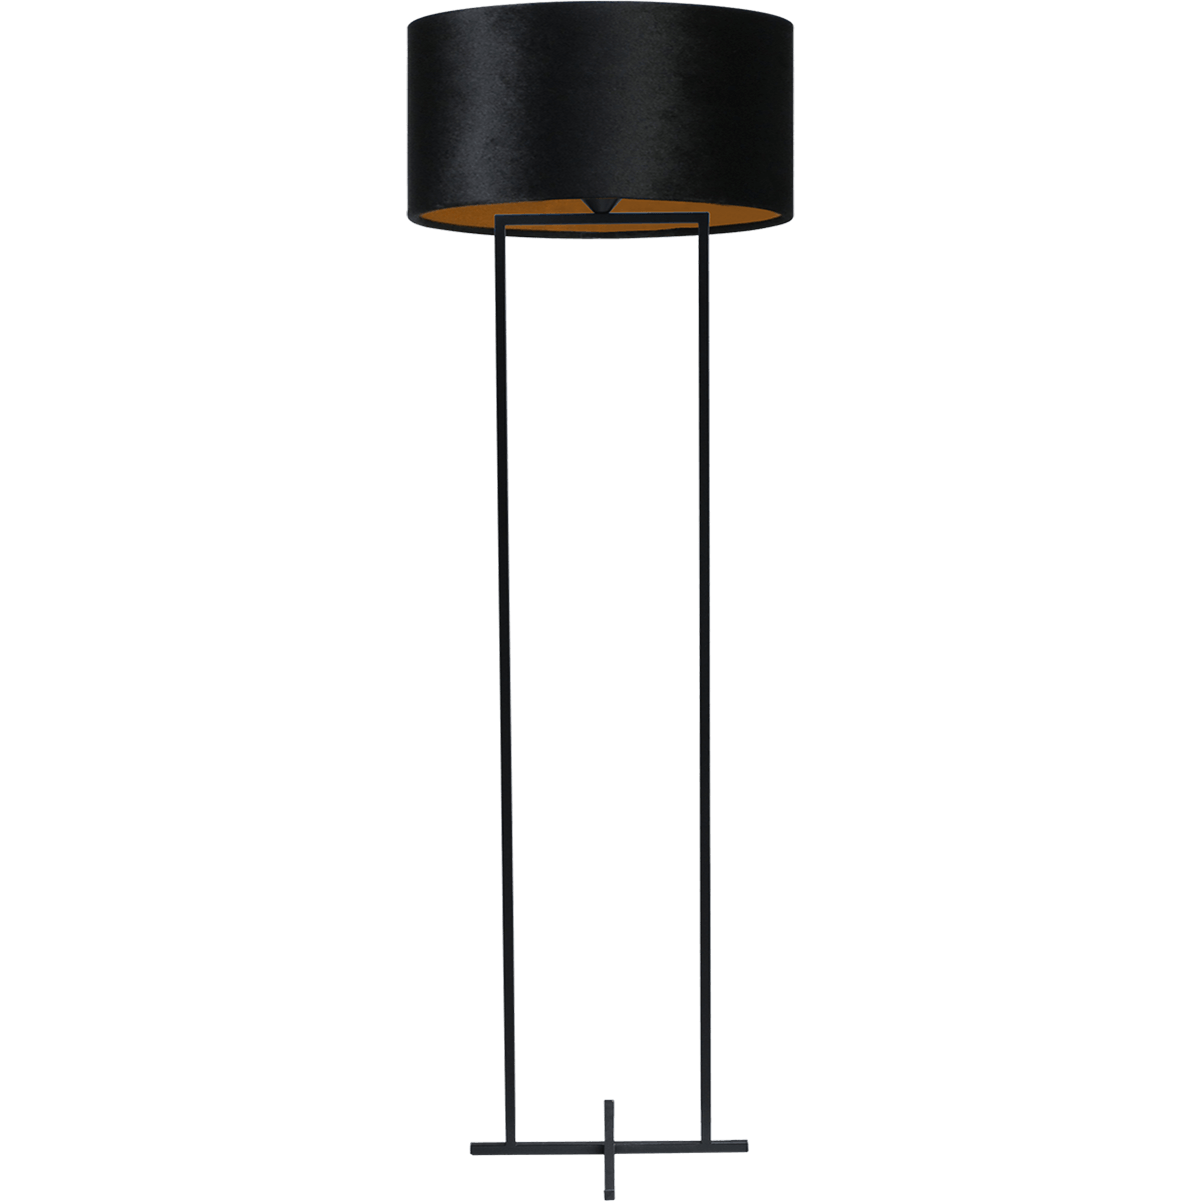 Vloerlamp Cross Rectangle zwart structuur hoogte 158cm inclusief zwarte lampenkap Artik black 52/52/25 - MASTERLIGHT